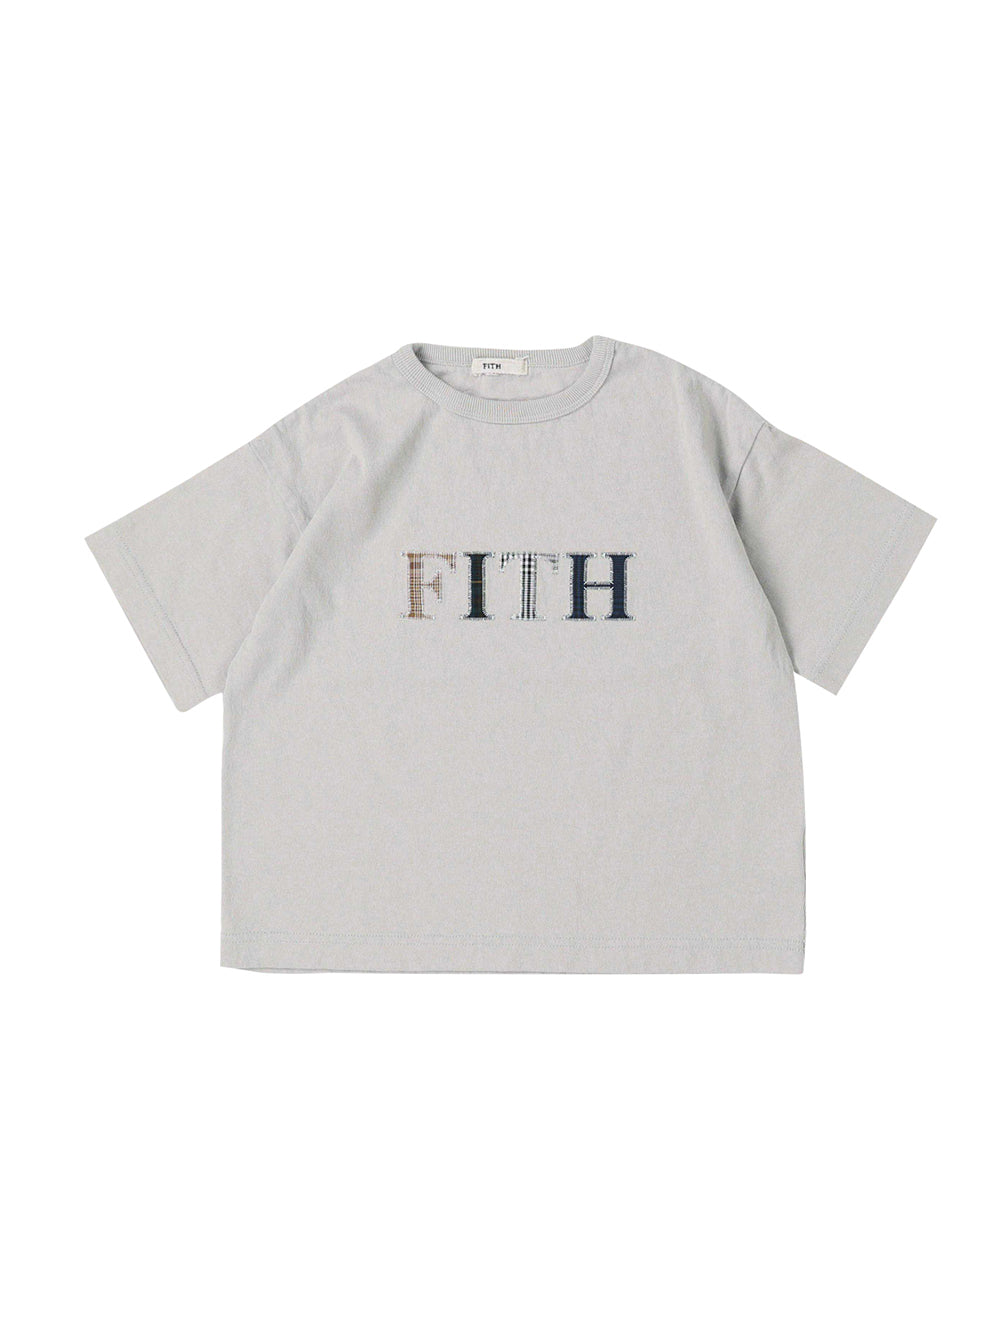 Fith Applique Grey T-Shirt